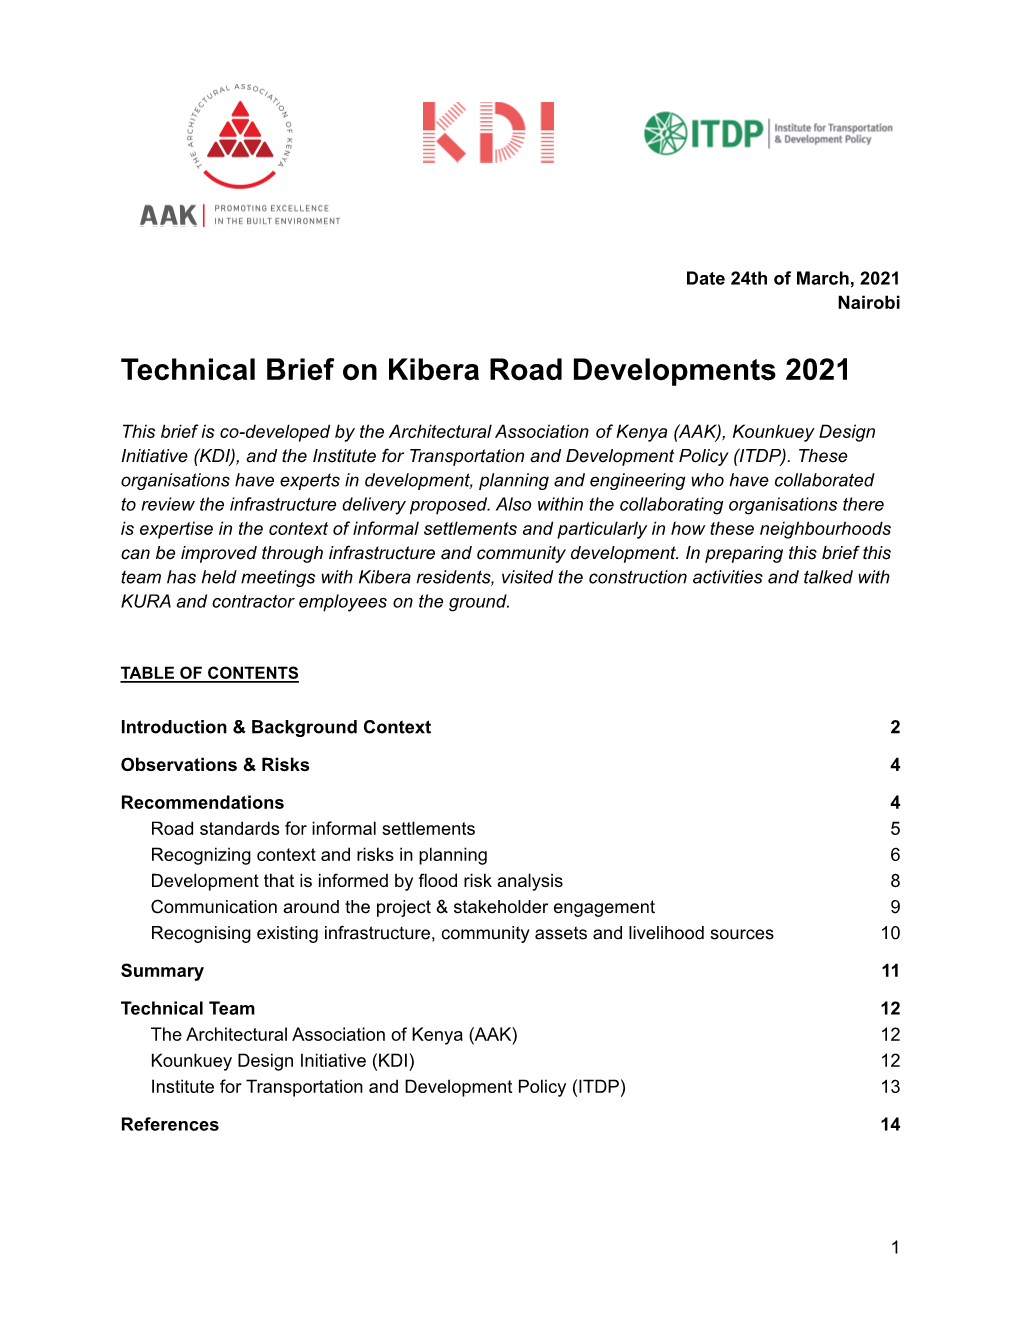 Technical Brief on Kibera Road Developments 2021 Apr, 2021